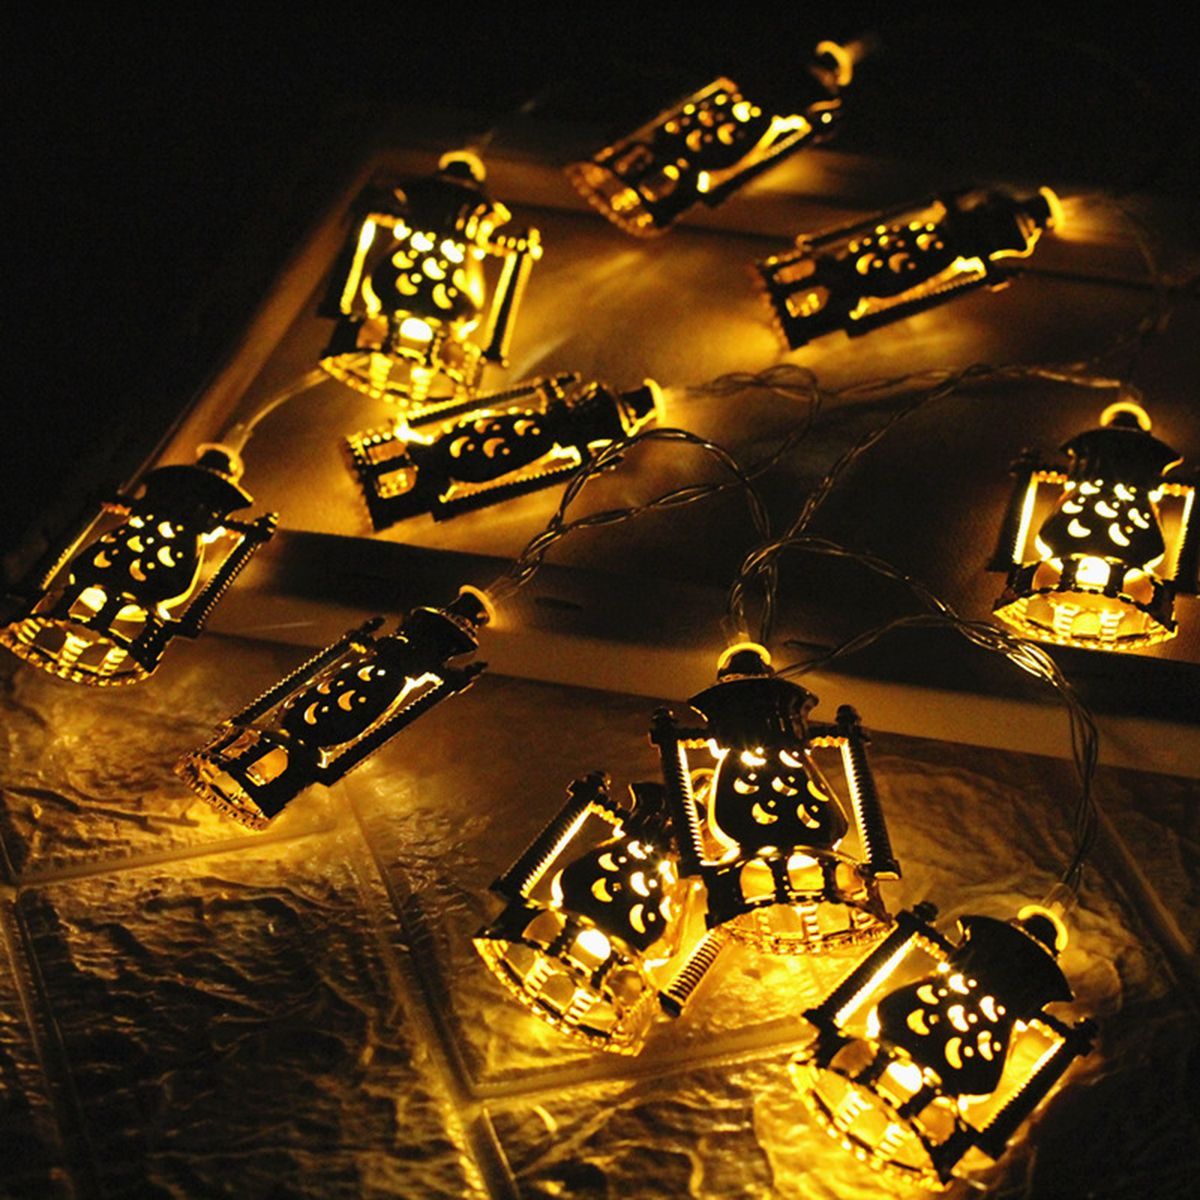 Eid-Mubarak-Ramadan-LED-Lamp-Strings-Golden-Castle-Moon-Lights-Decor-1670157